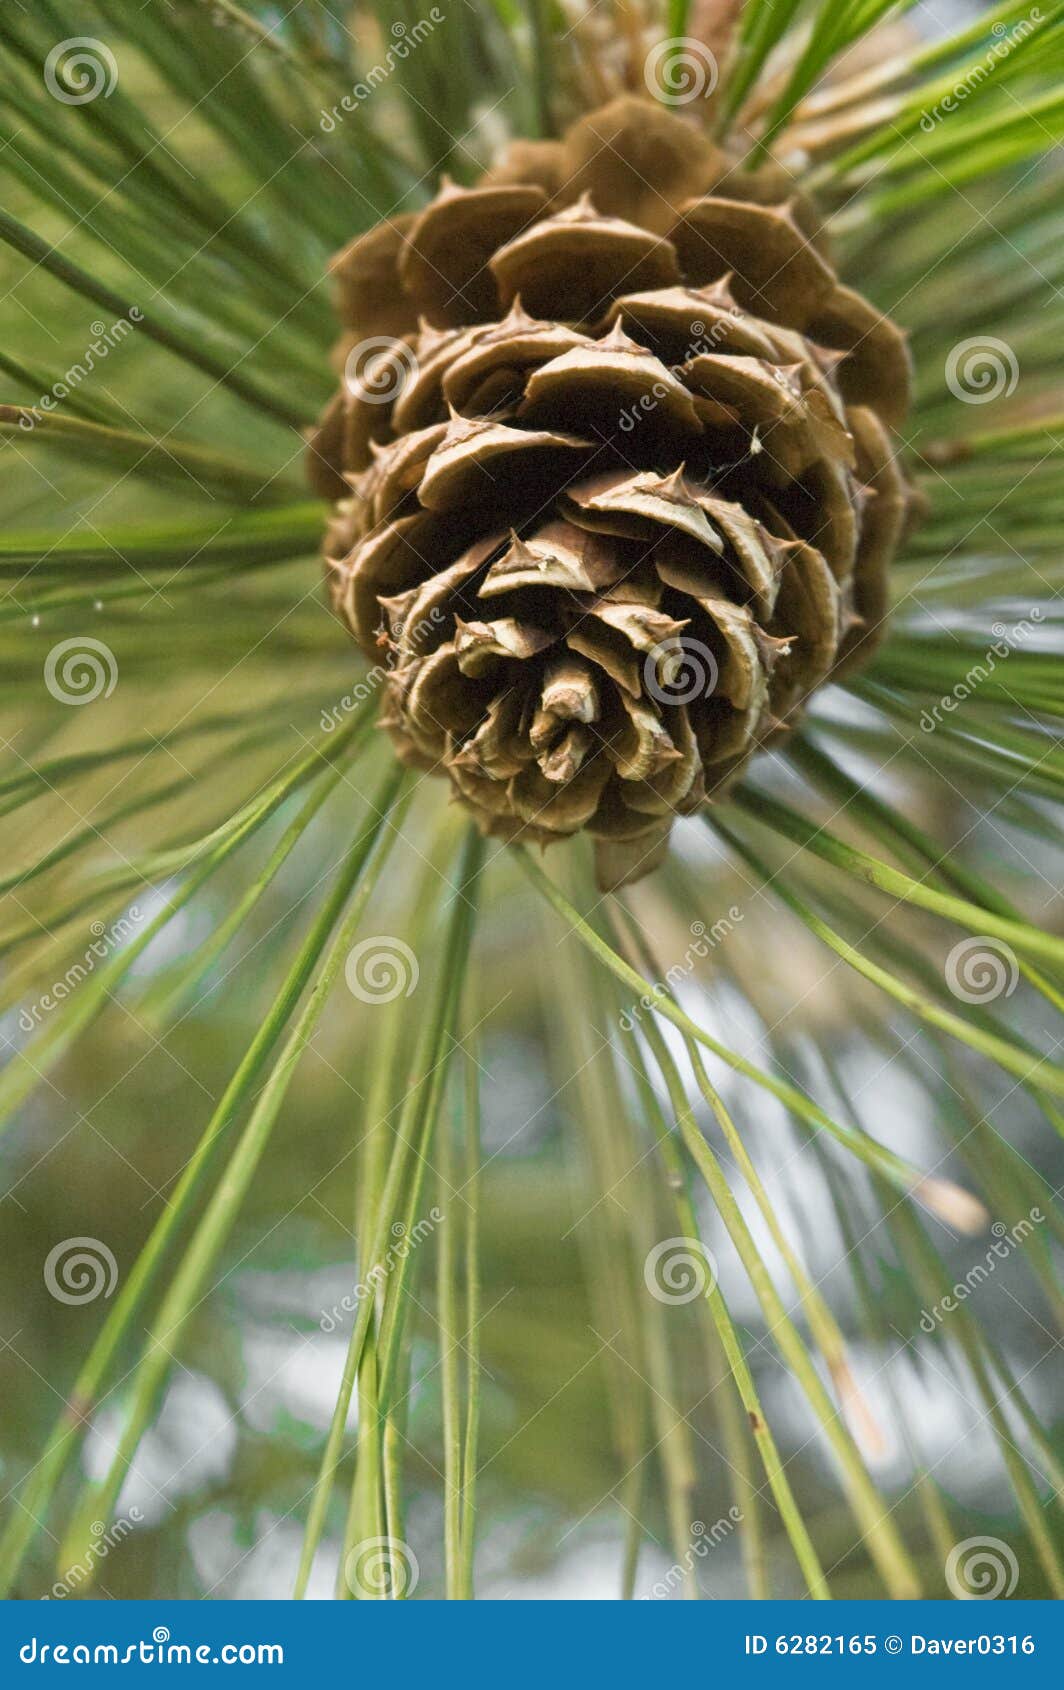 pine cone selective focus